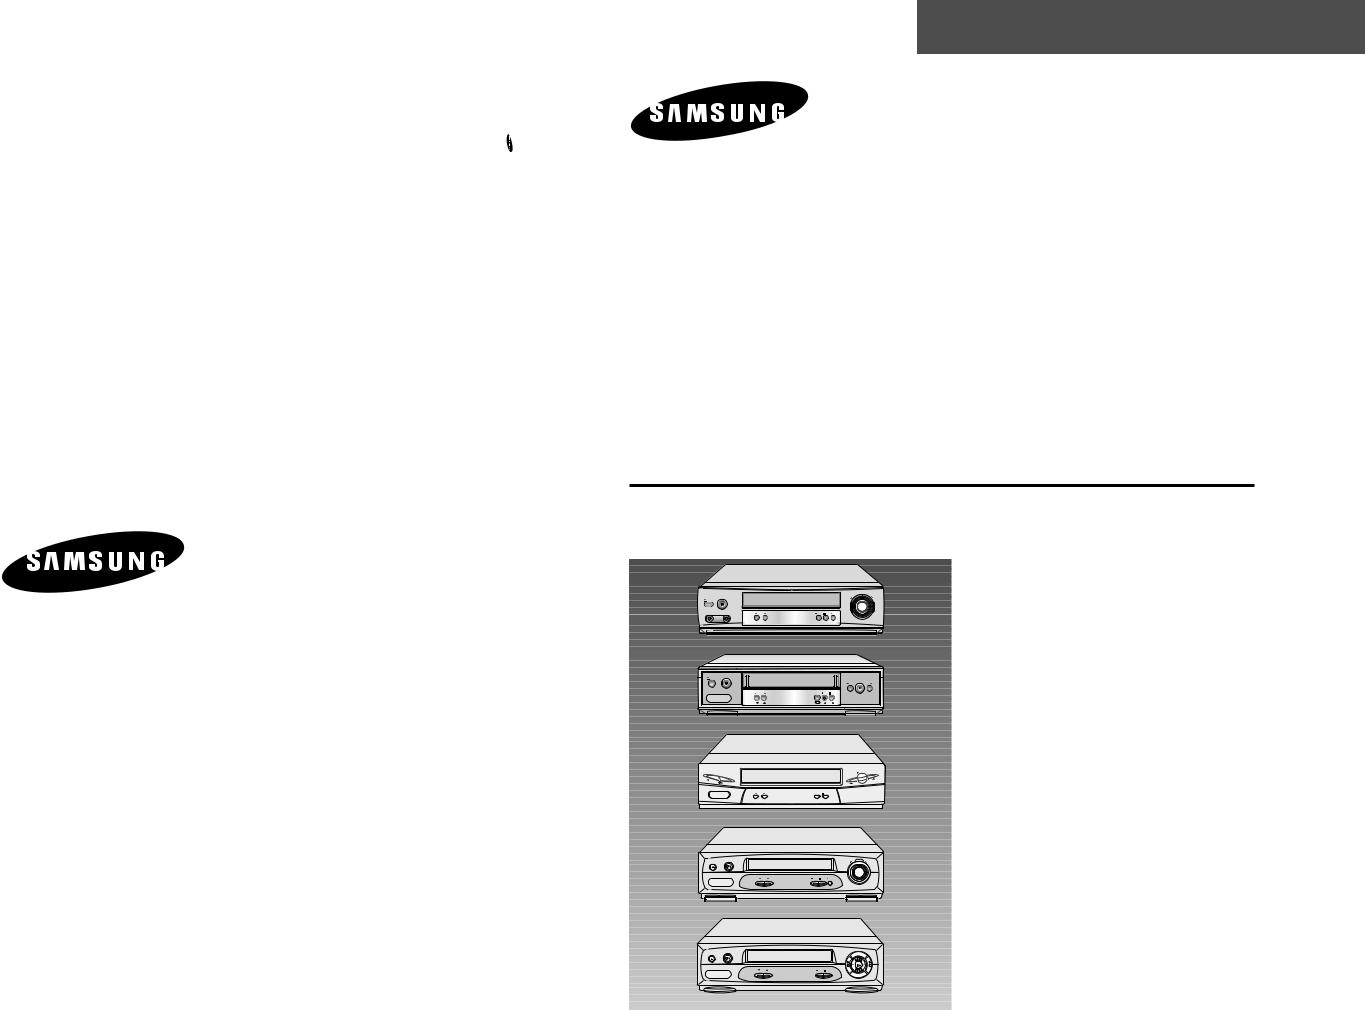 Samsung SVR-141, SVR-240W, SVR-243, SVR-2401, SVR-440 Service Manual